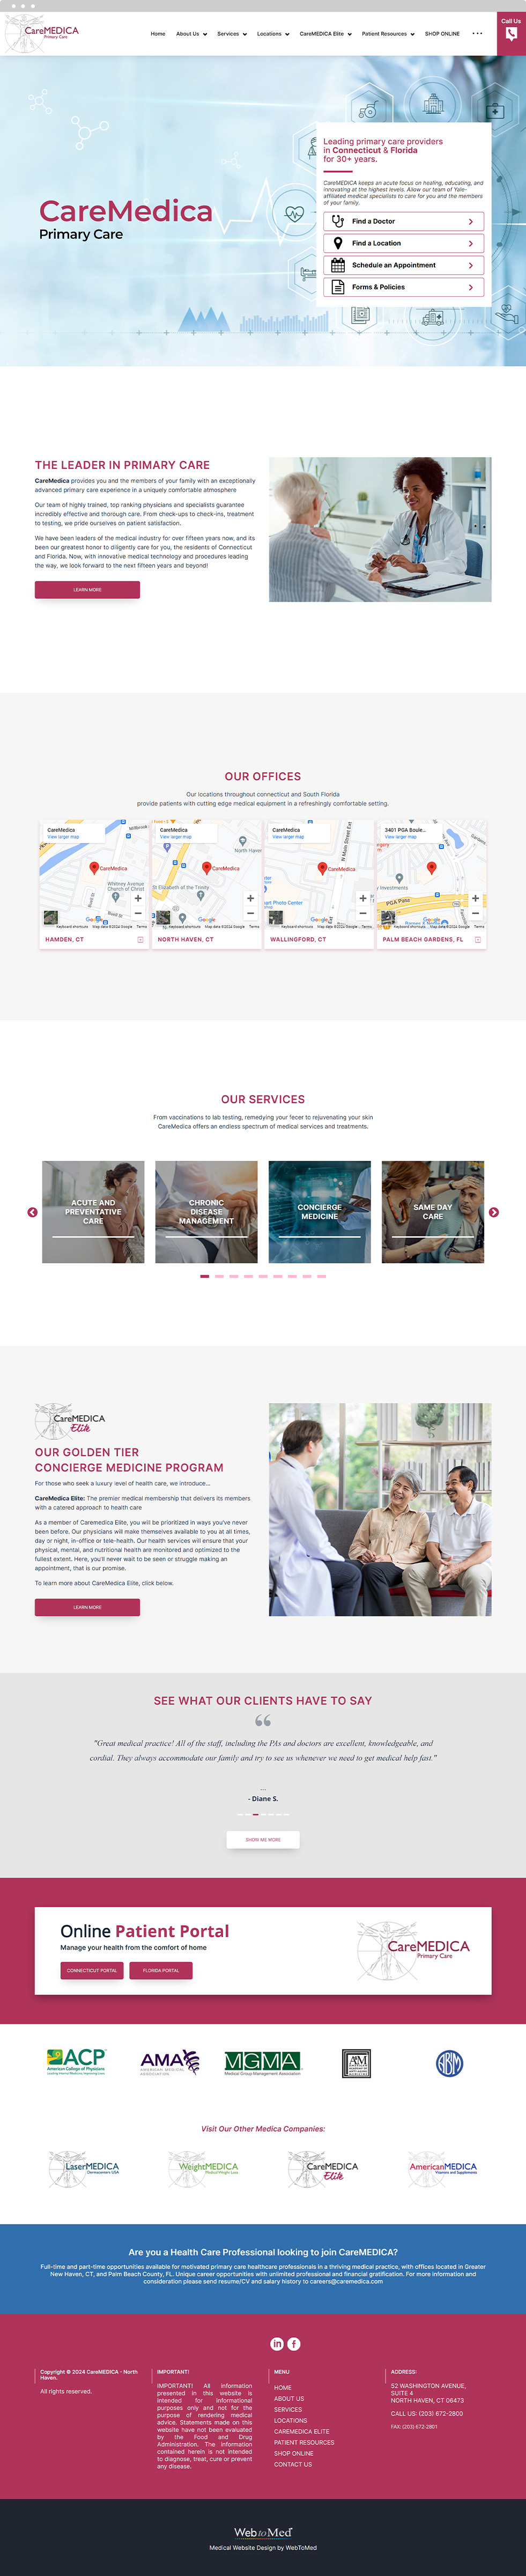 Concierge Medicine Website Design - CareMEDICA - Homepage